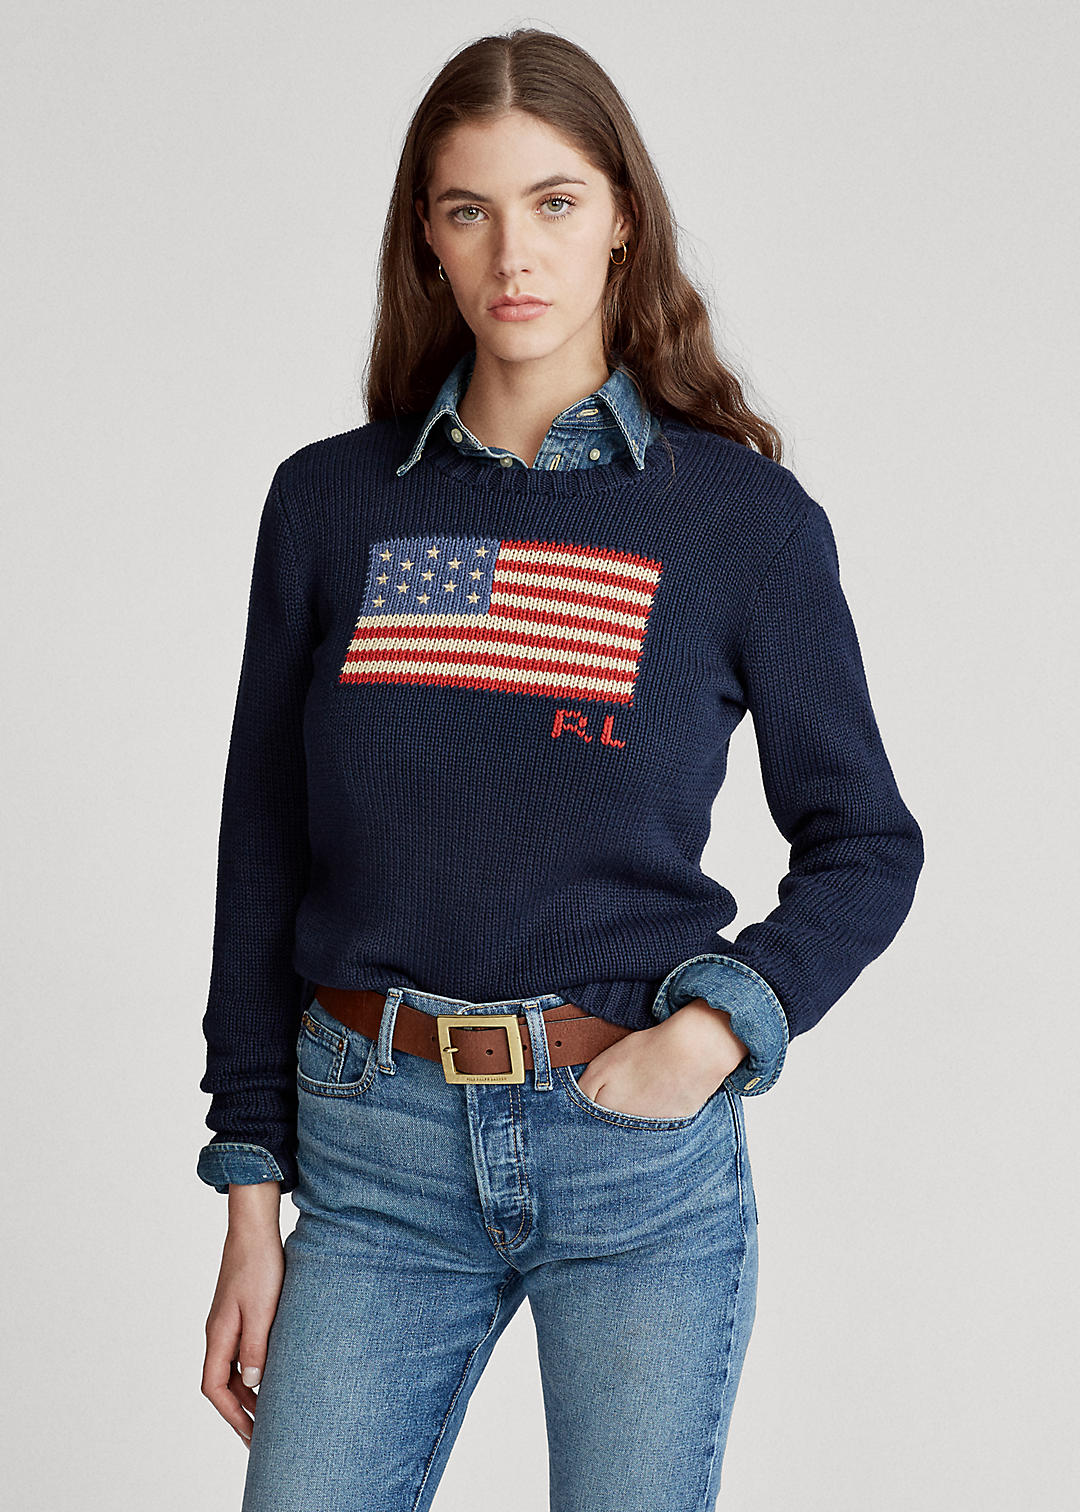 underordnet Fæstning Nonsens Women's Flag Cotton Crewneck Sweater | Ralph Lauren